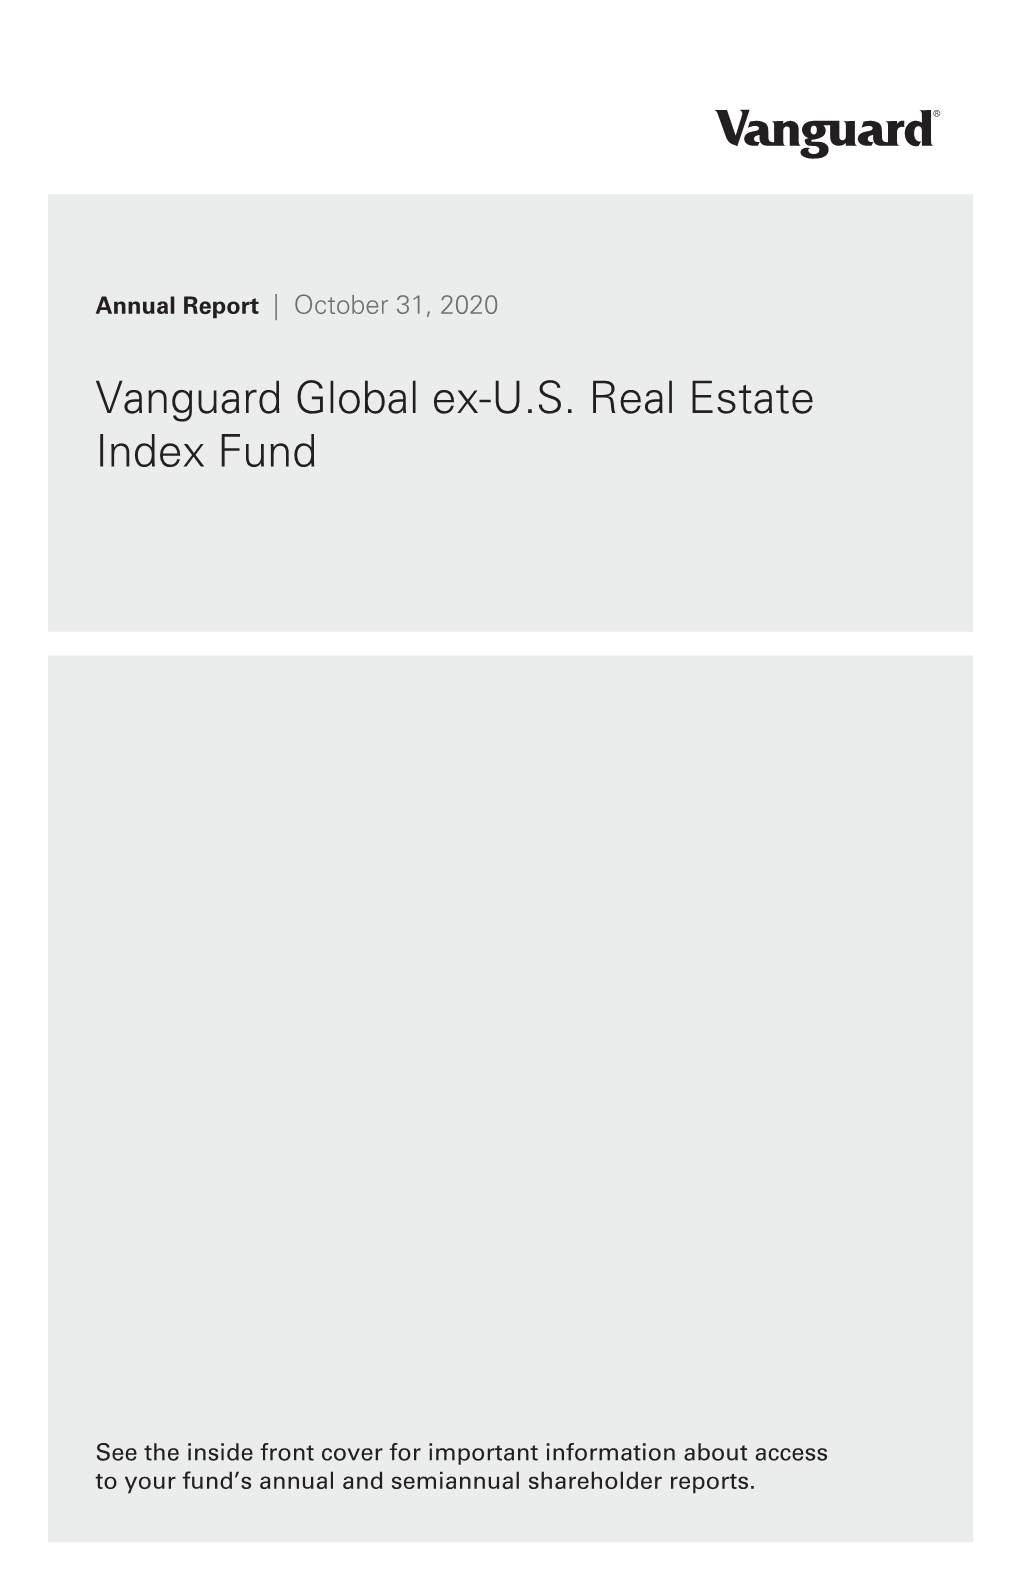 Vanguard Global Ex-U.S. Real Estate Index Fund Annual Report October 31, 2020